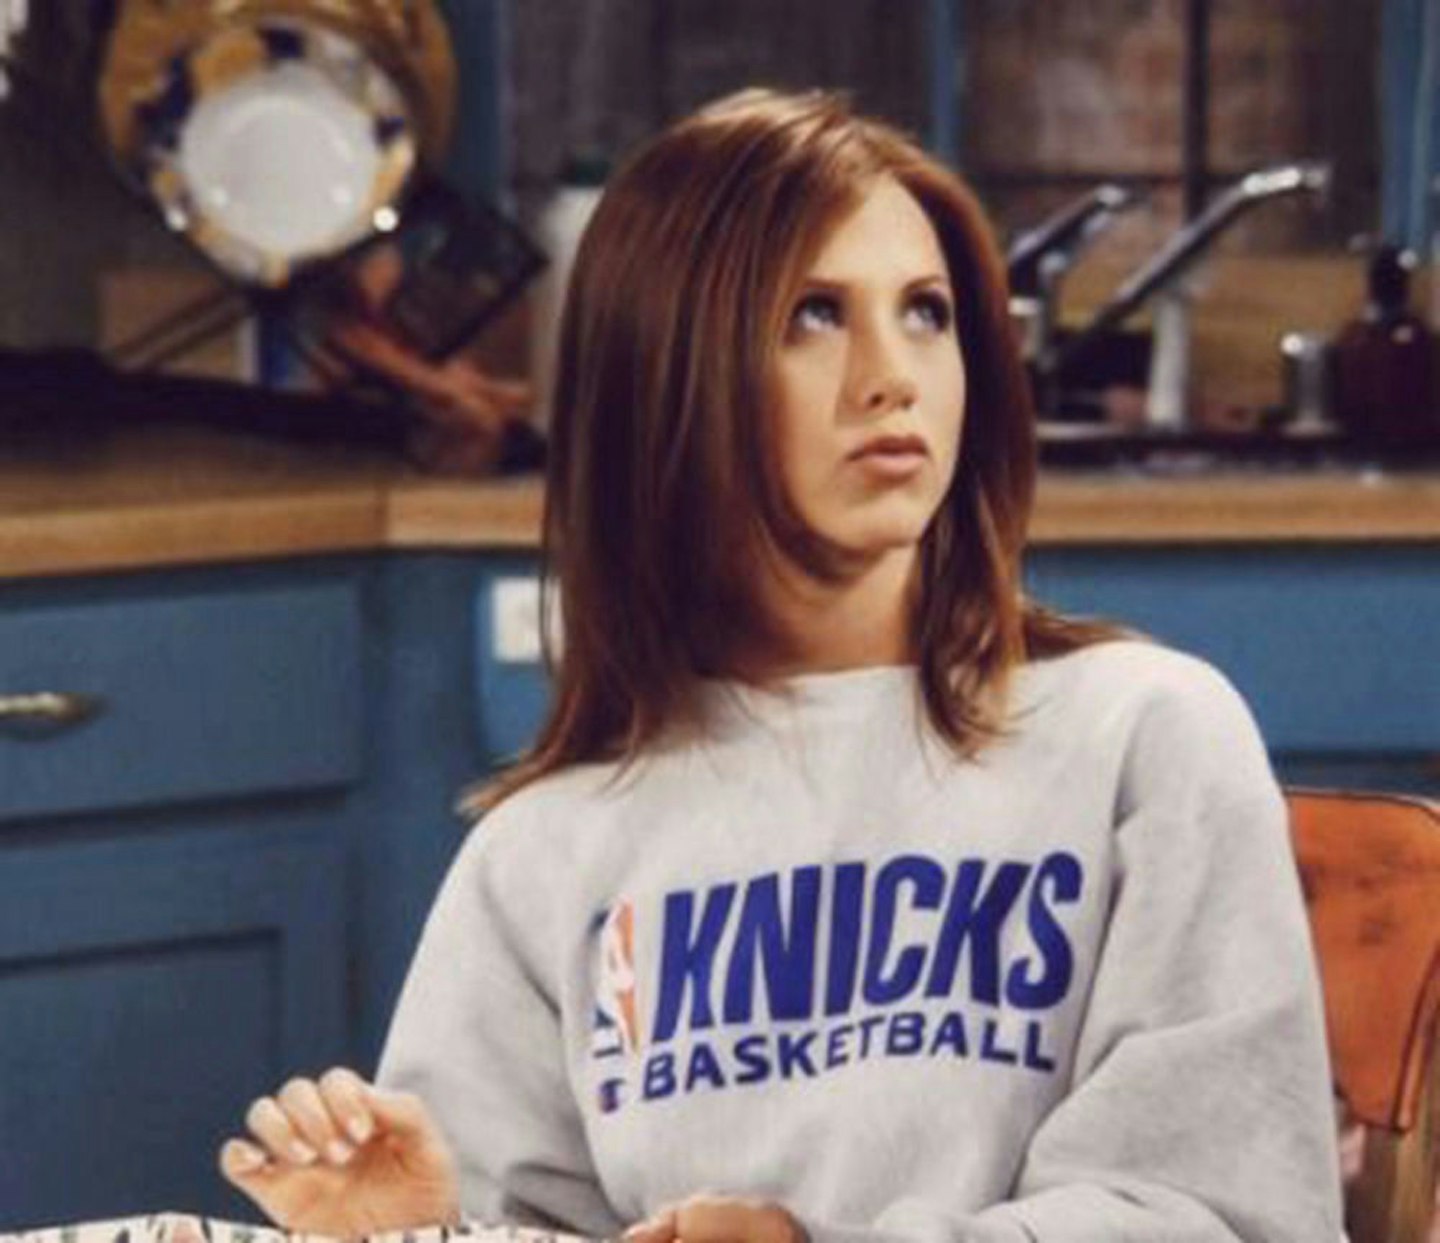 Rachel friends Knicks jumper 